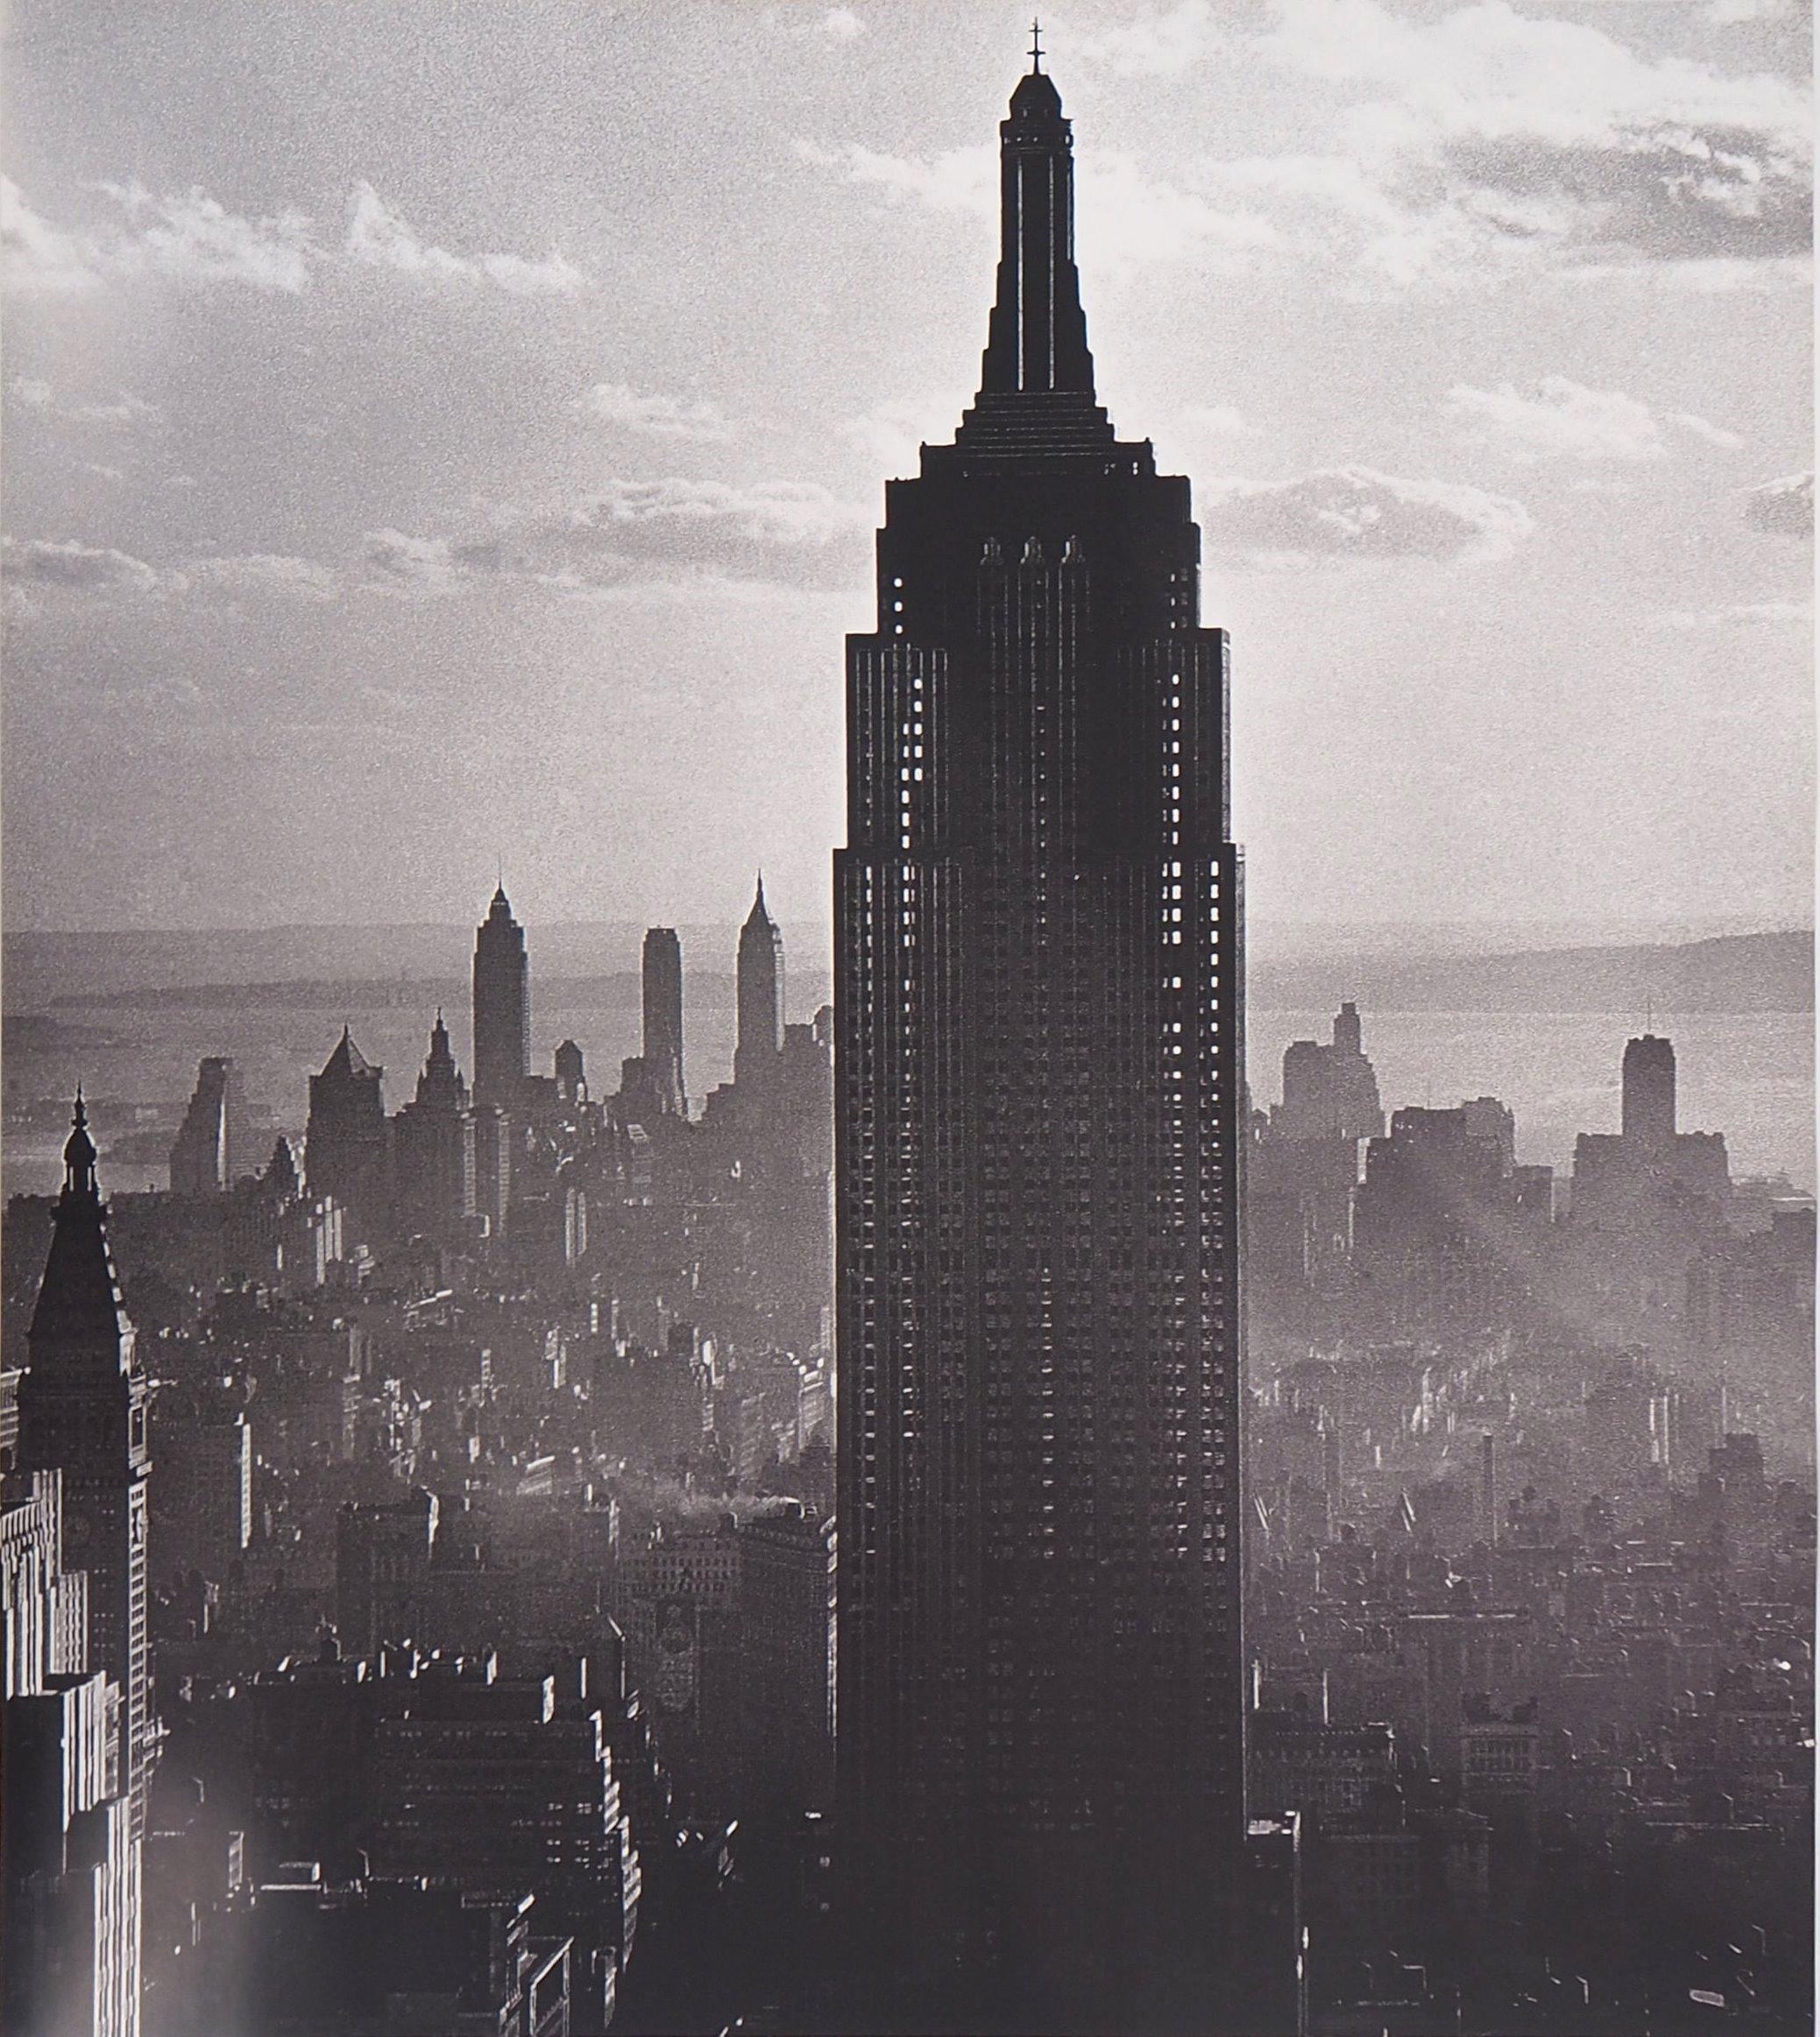 New York: Empire State Building - Quadrichromie Poster, 2008 - Print by Andreas Feininger